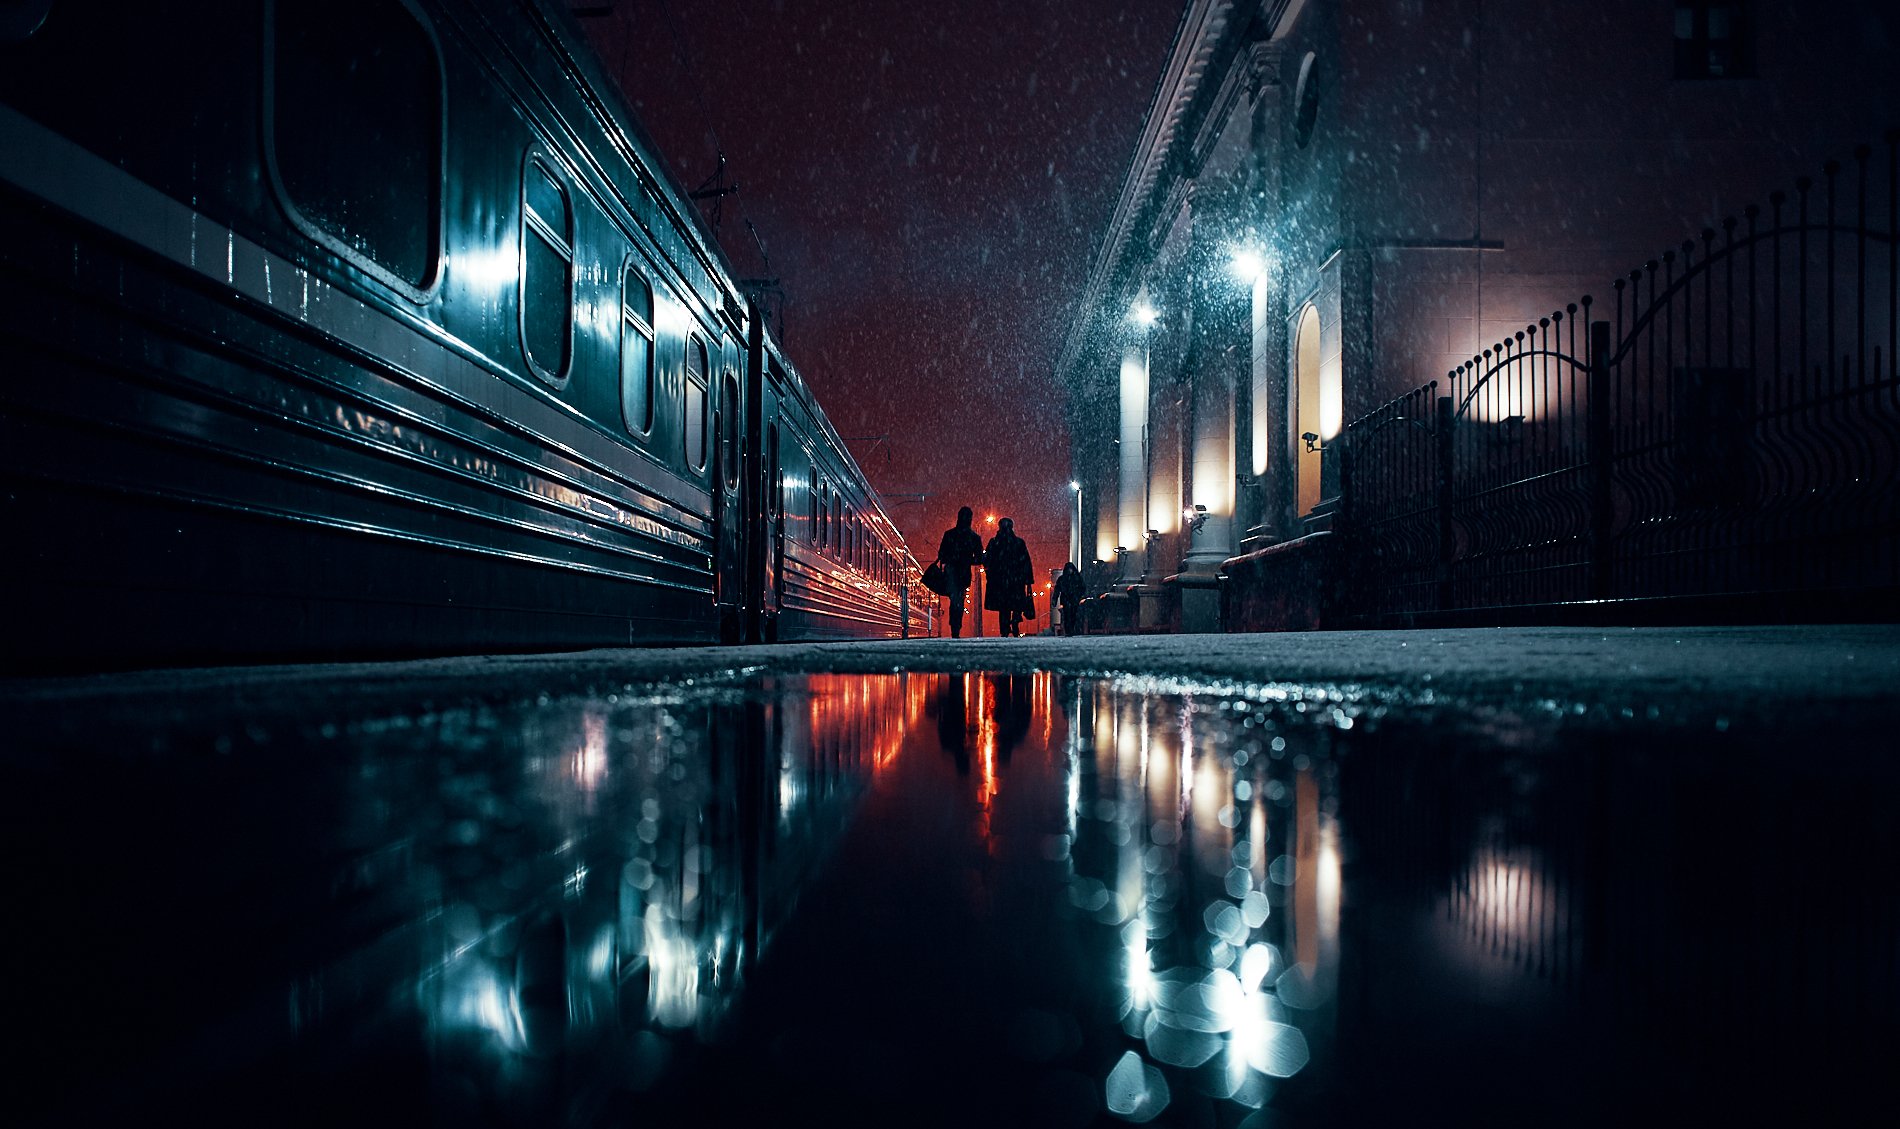 train, railway, station, street, reflection, поезд, вокзал, отражение, люди, улица, street, Александр Фанковин